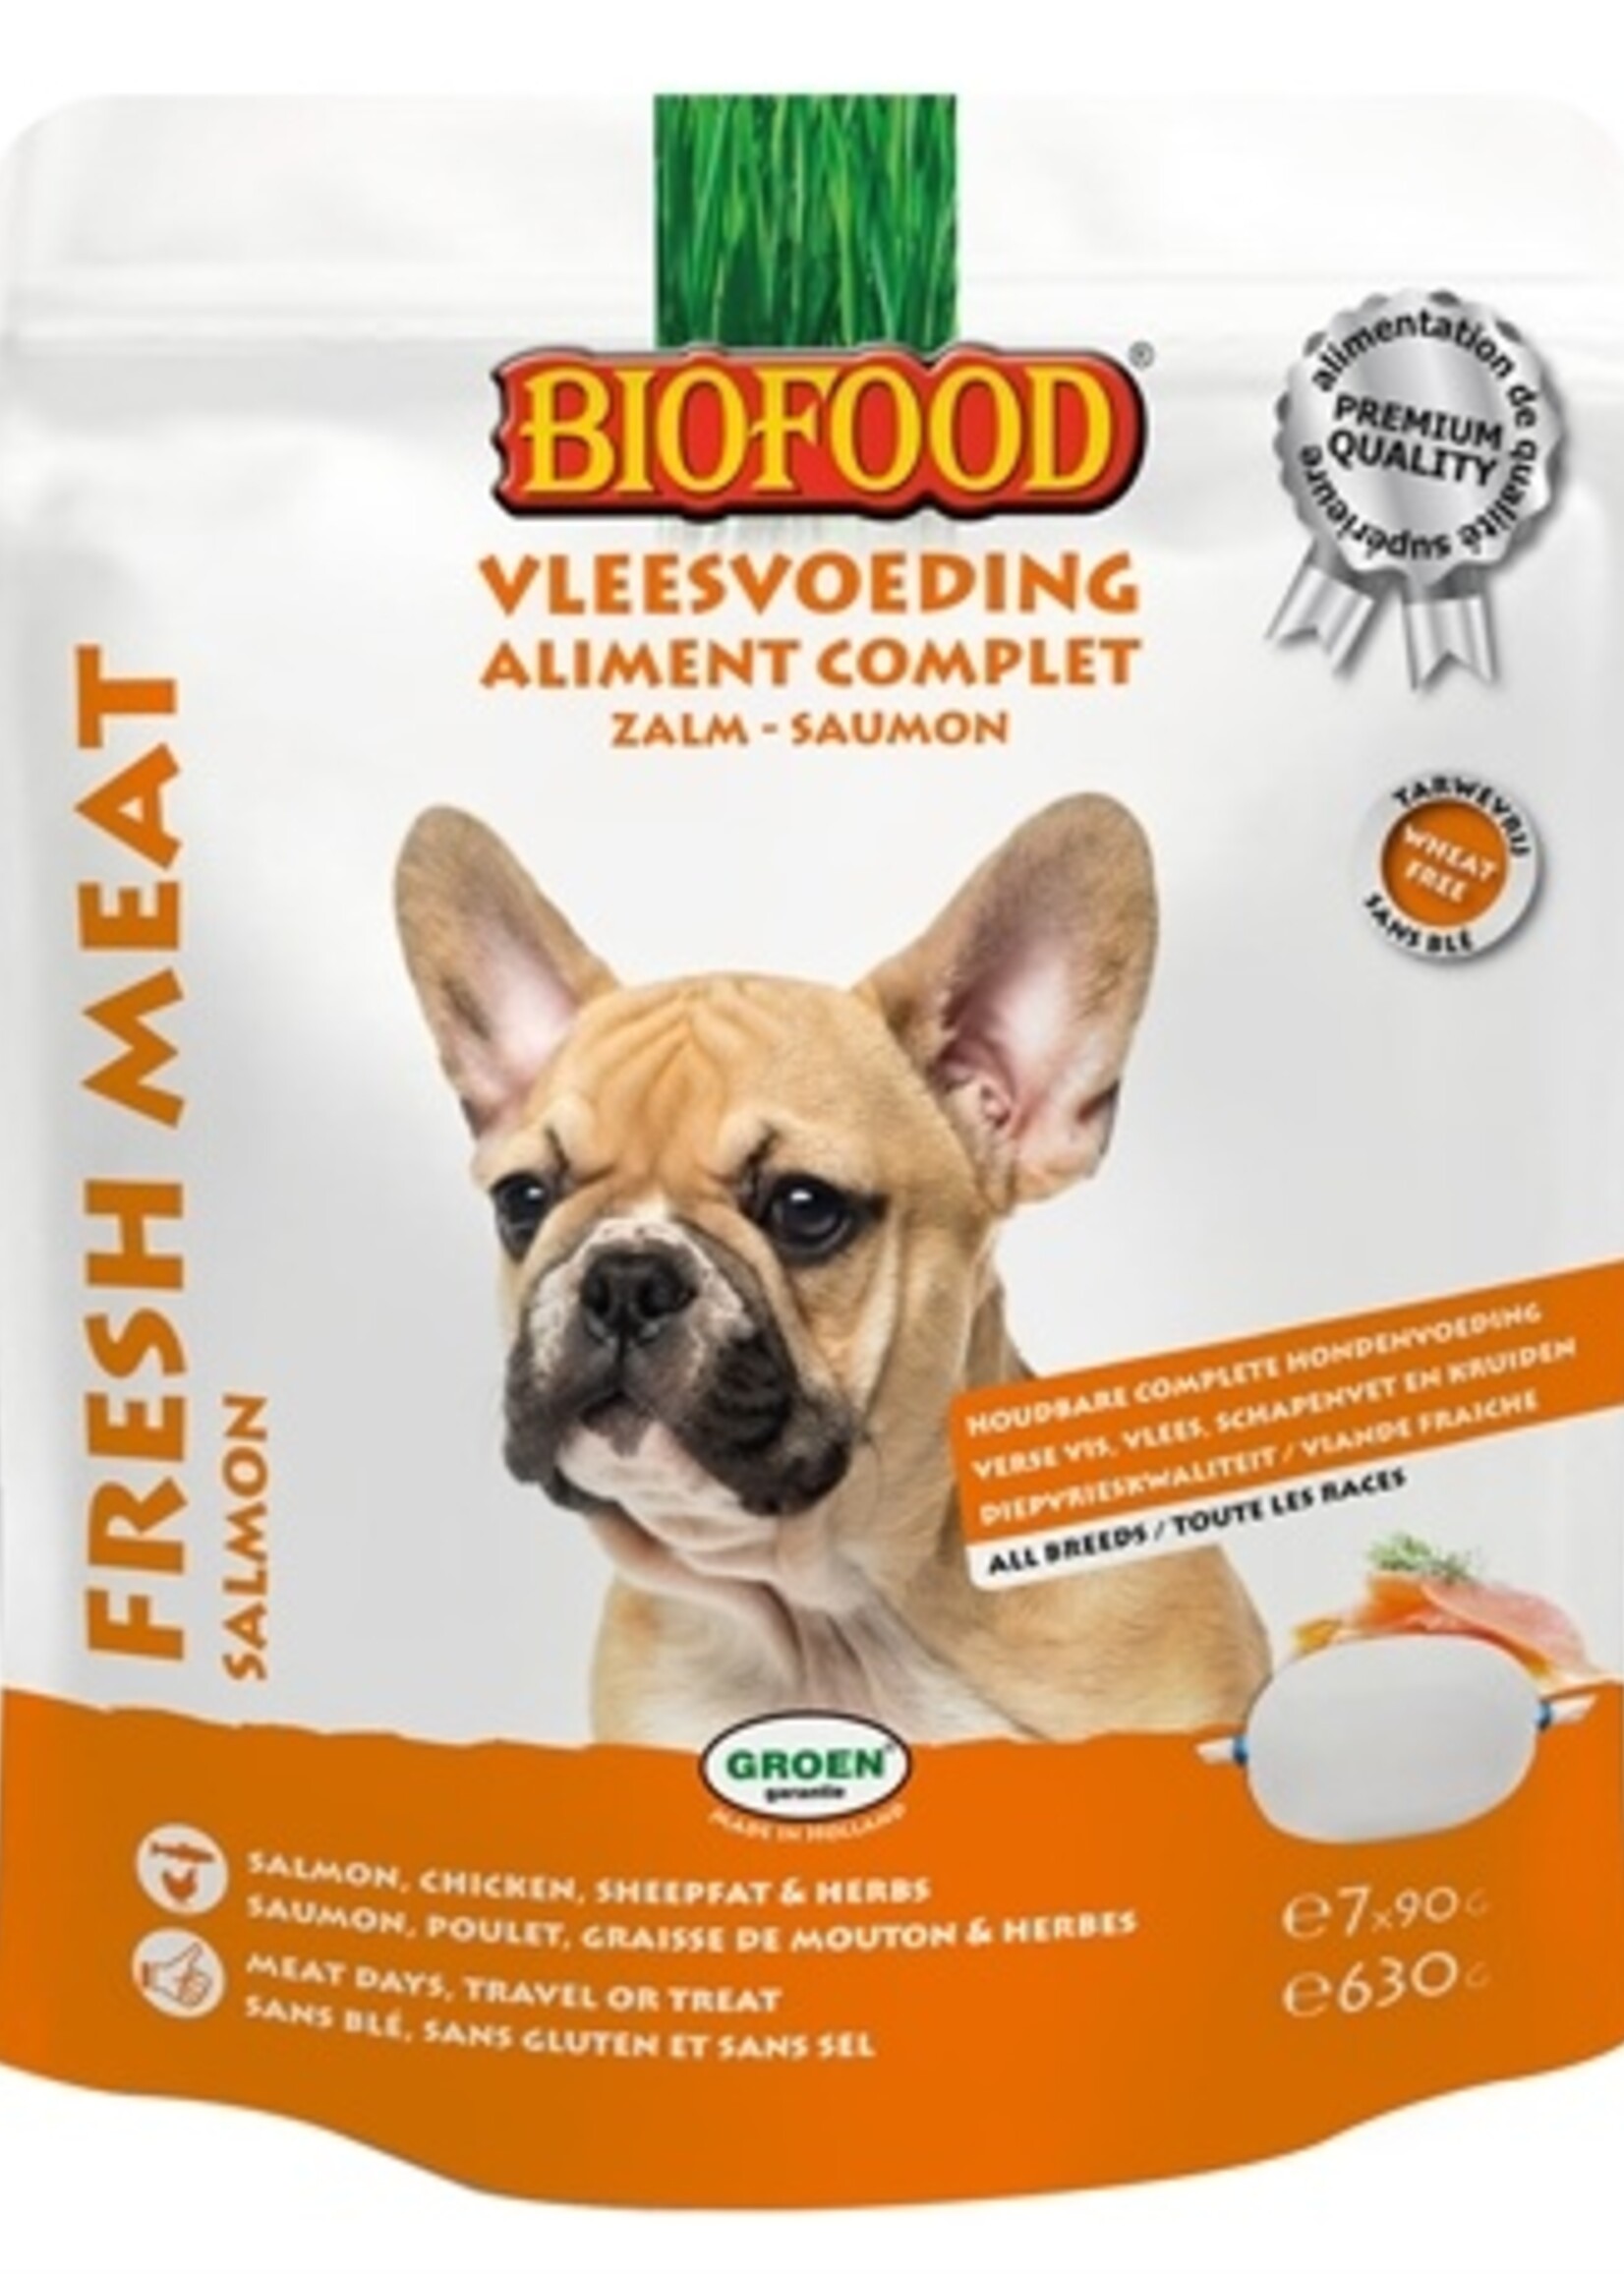 Biofood Biofood vleesvoeding zalm worst